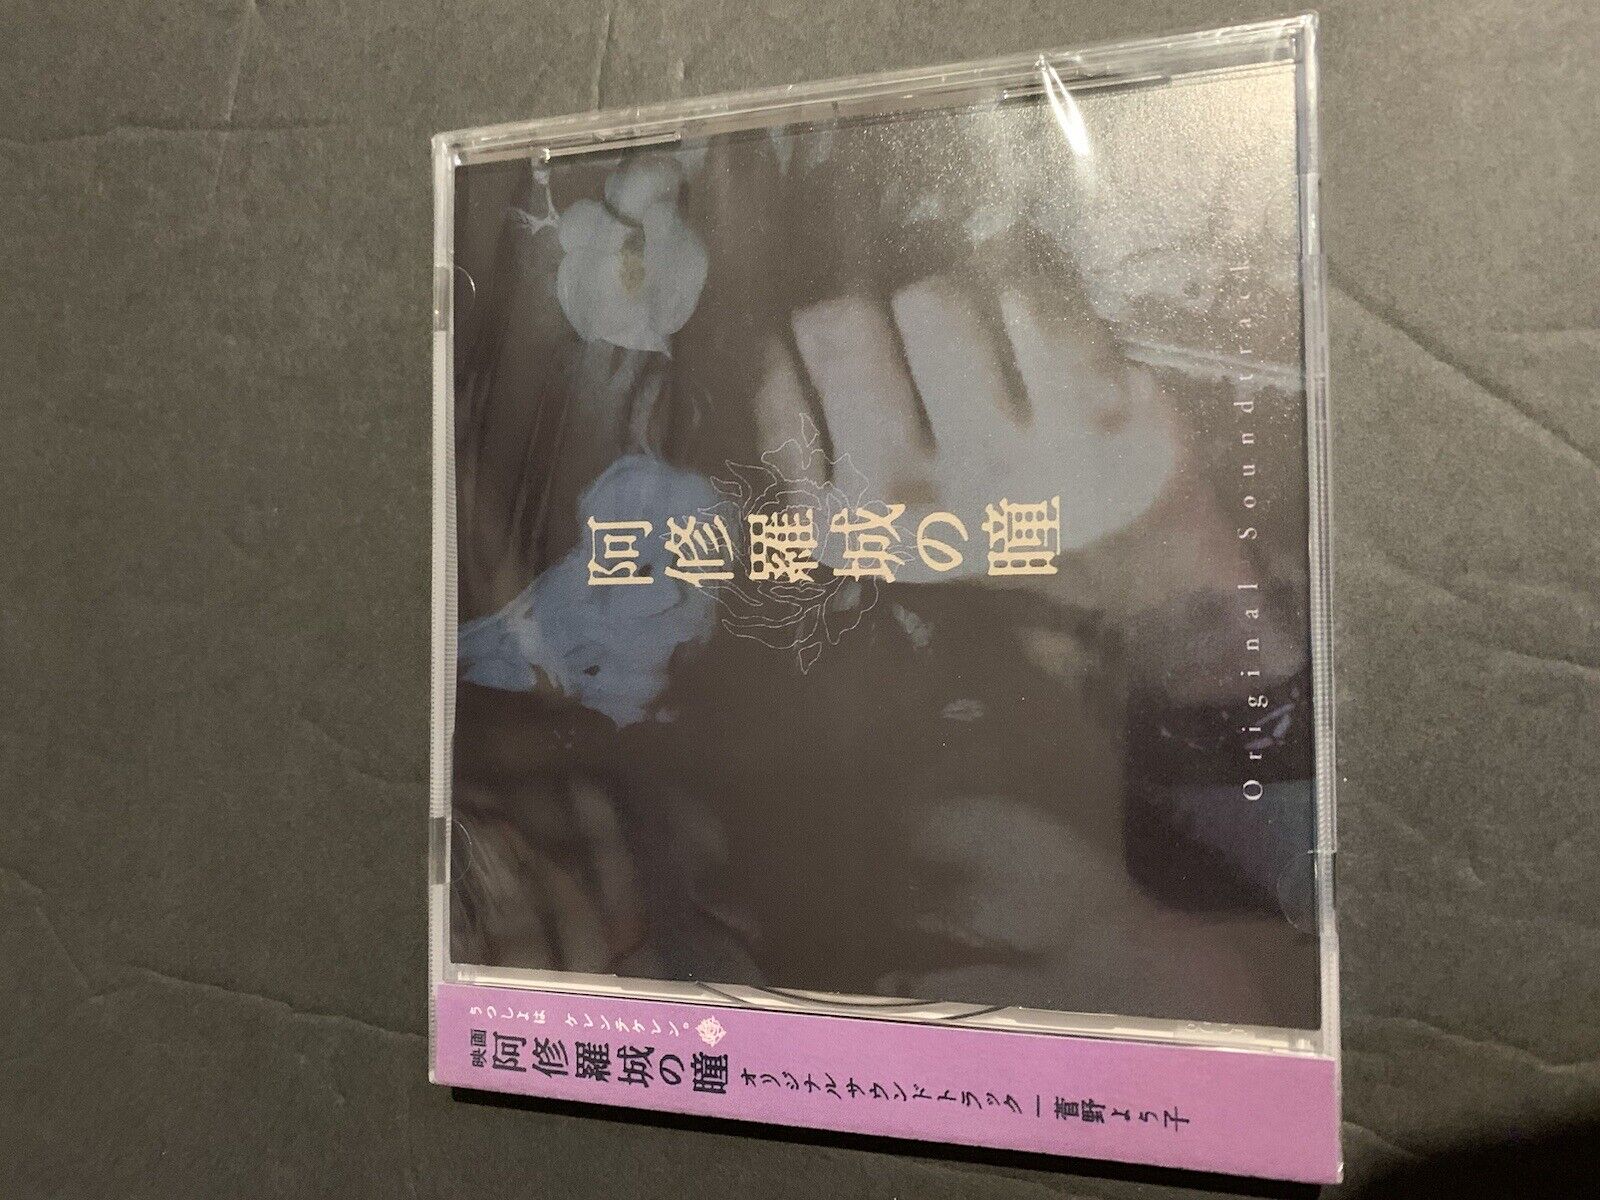 ANIME GAME SOUNDTRACK CD OST ASHURA-JO NO HITOMI SERIES SCORE